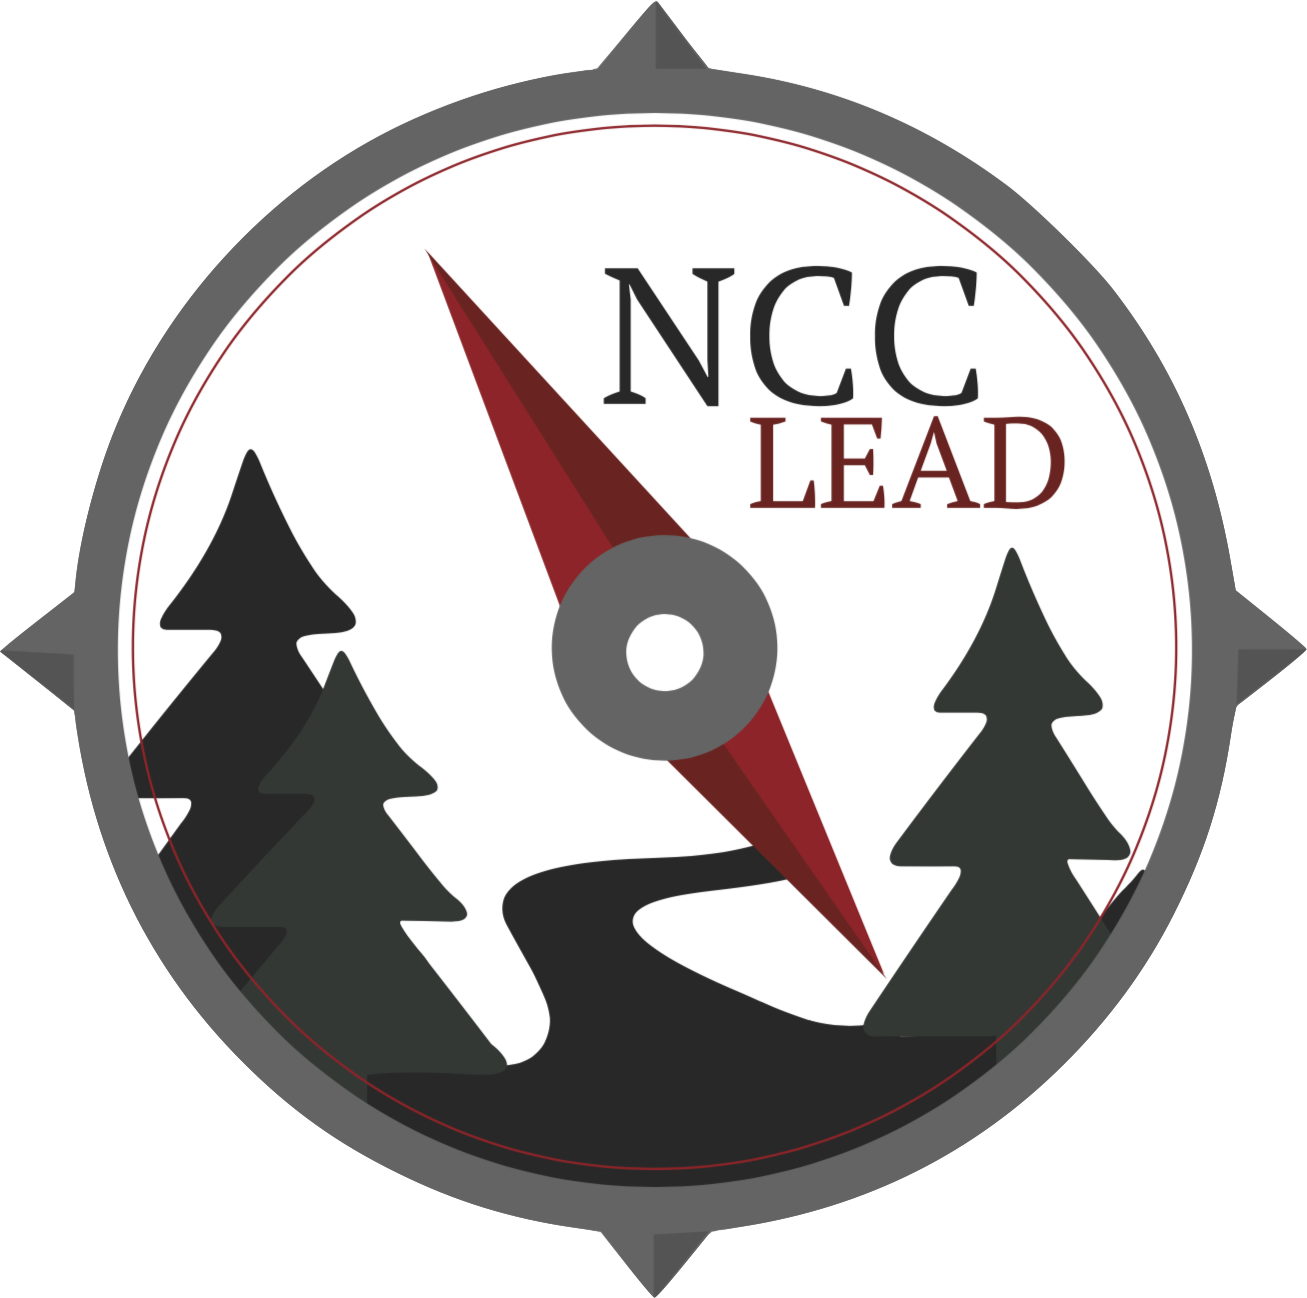 NCC_lead logo